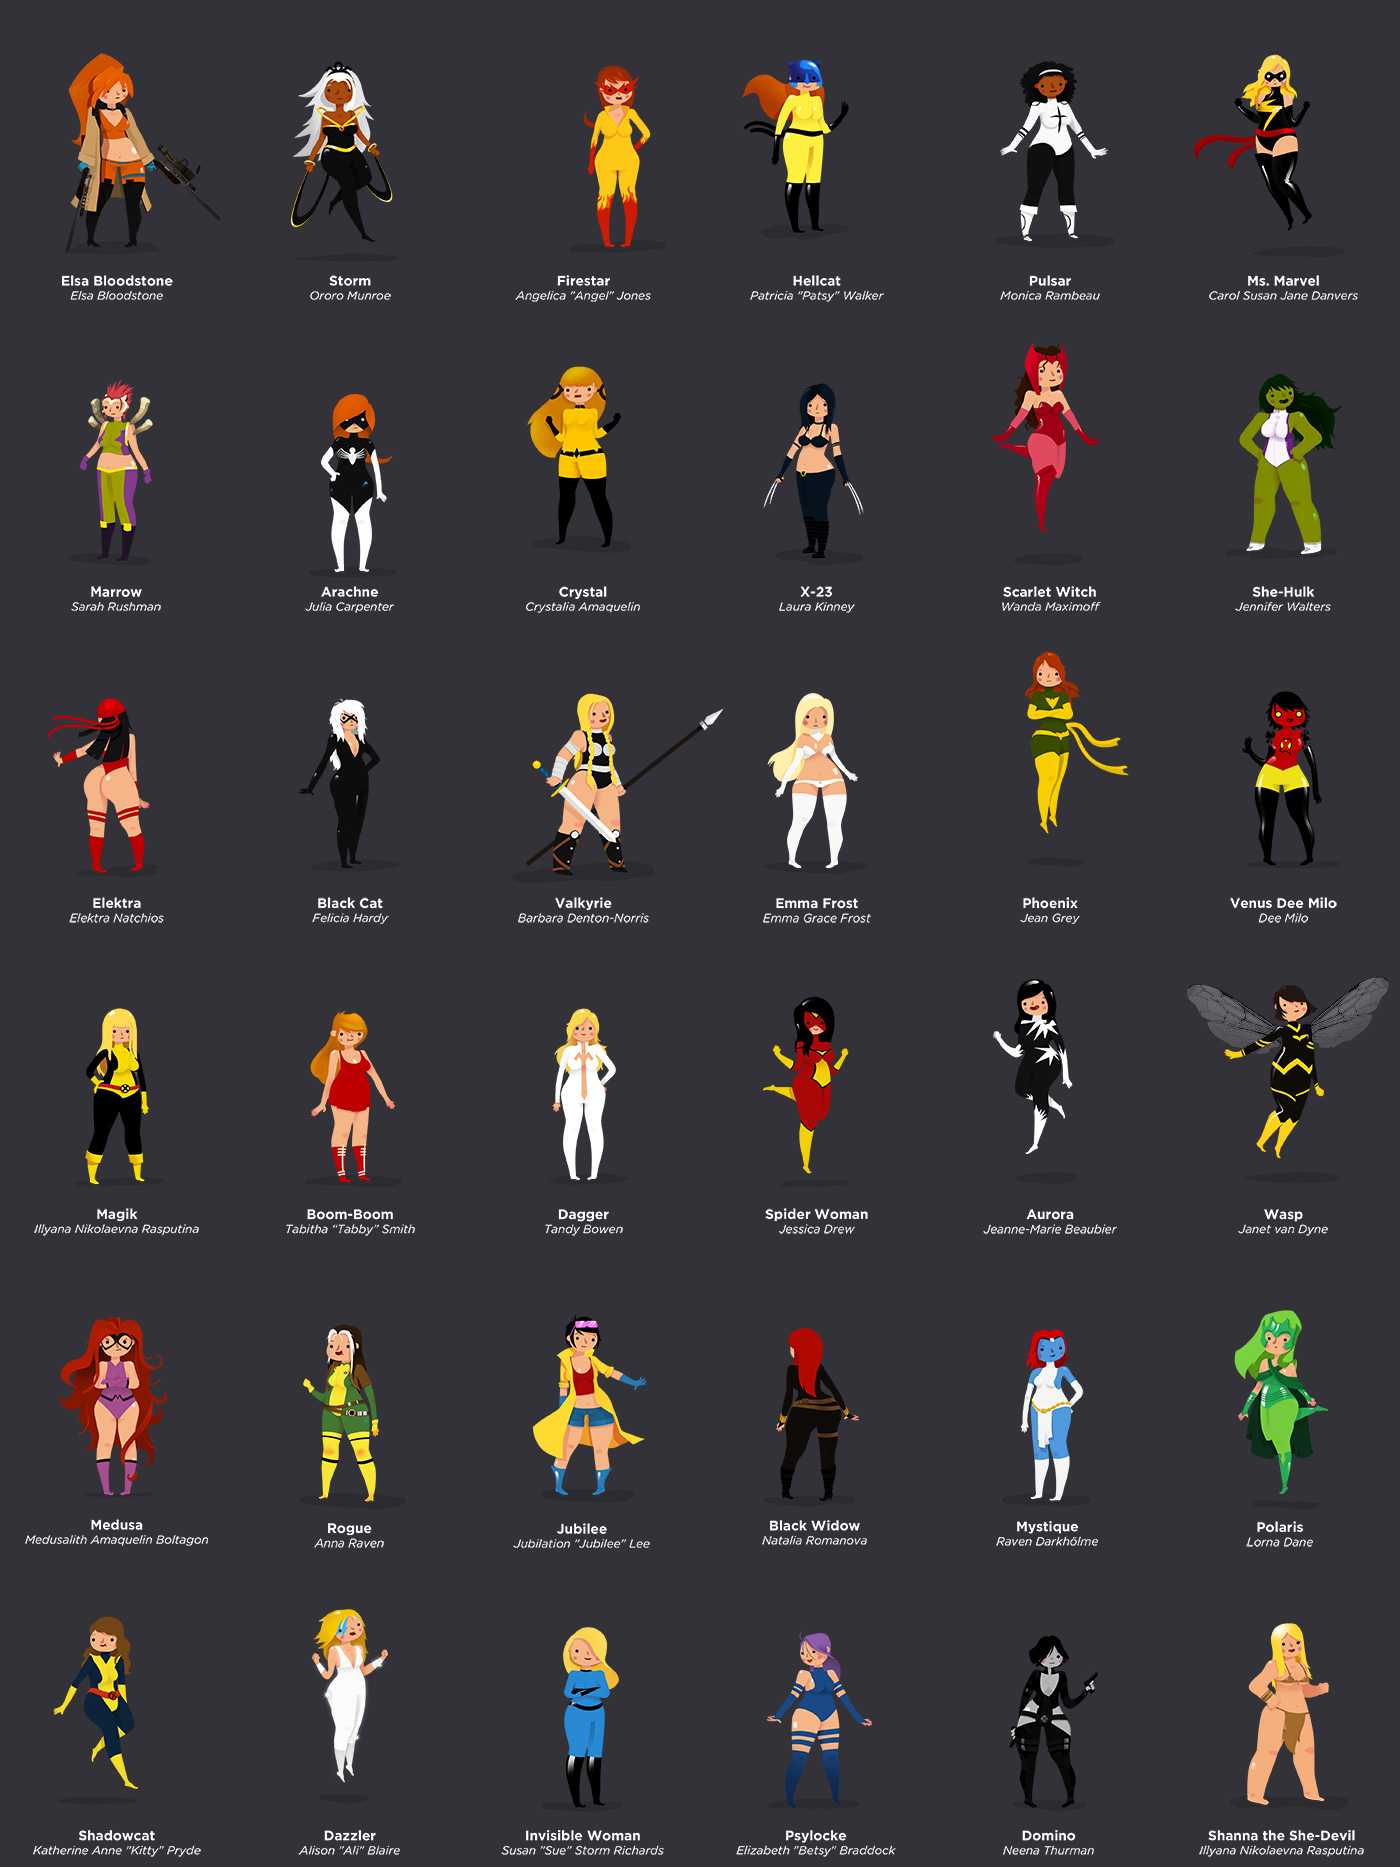 25 weird marvel cosplays (that put the originals to shame)